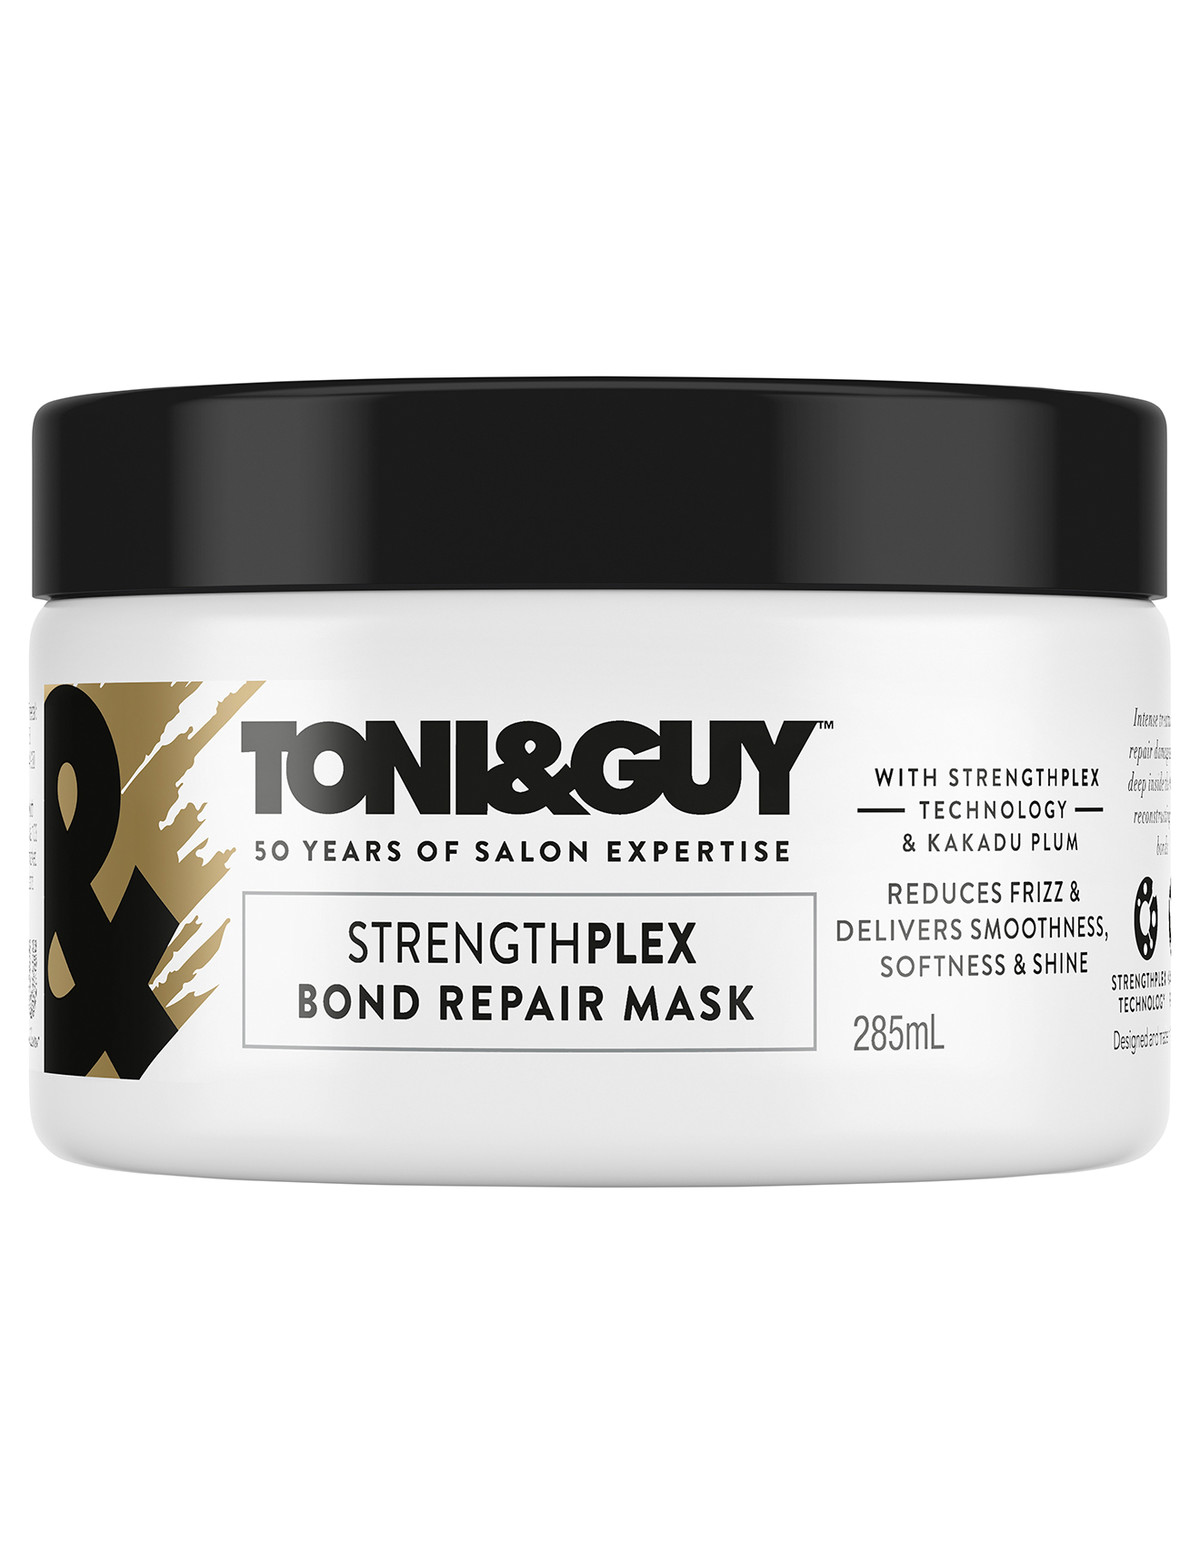 Toni & Guy Strengthplex Bond Repair Hair Mask, 285ml - Hair Care & Brushes